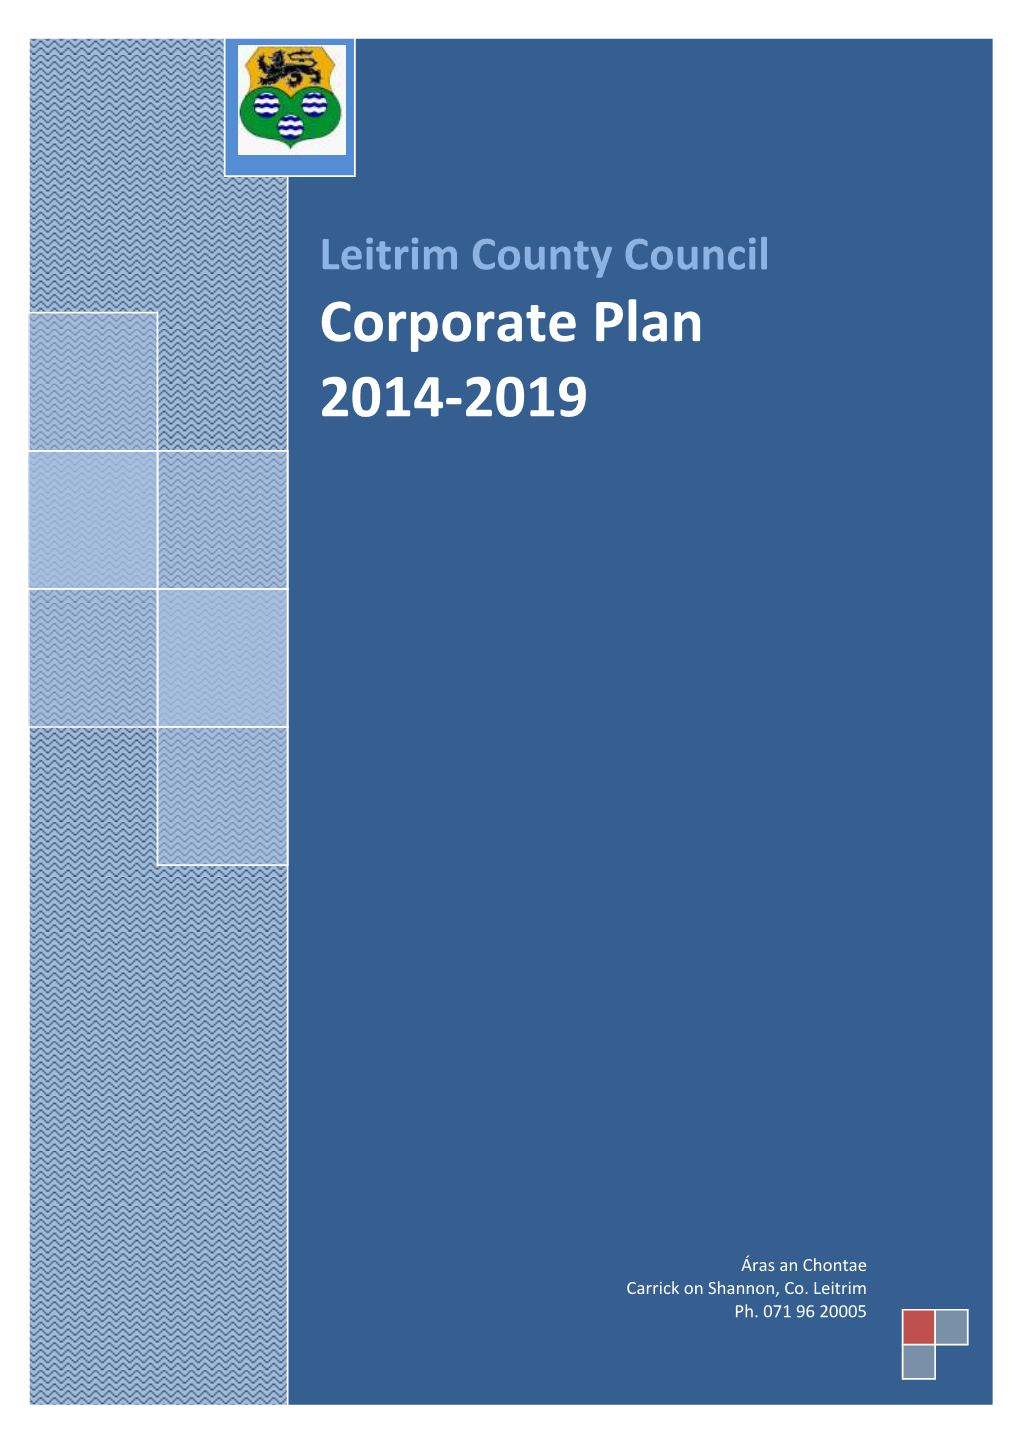 Corporate Plan 2014-2019